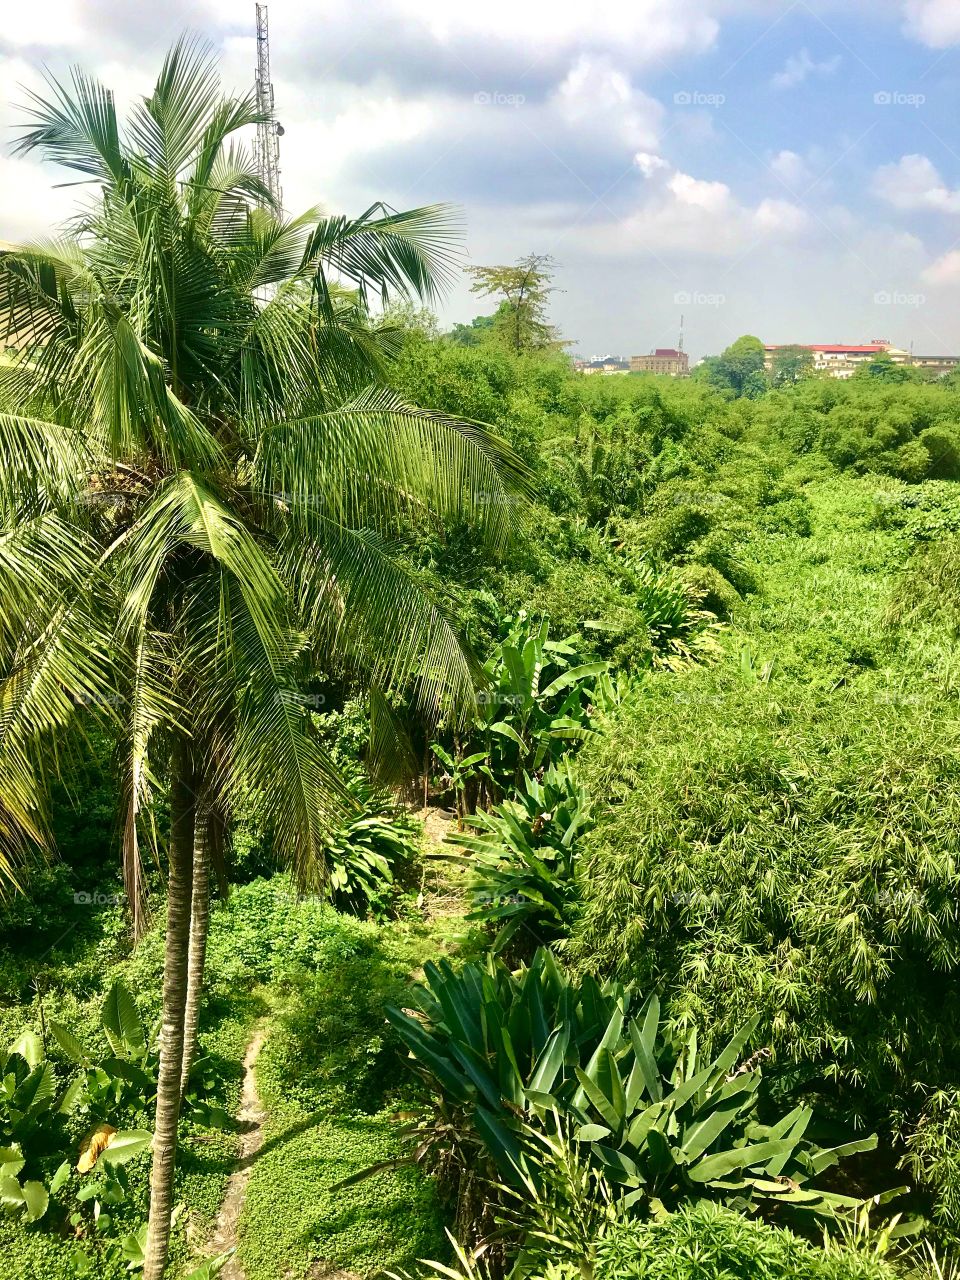 An urban jungle in Opebi Valley, Ikeja, Lagos State Nigeria 